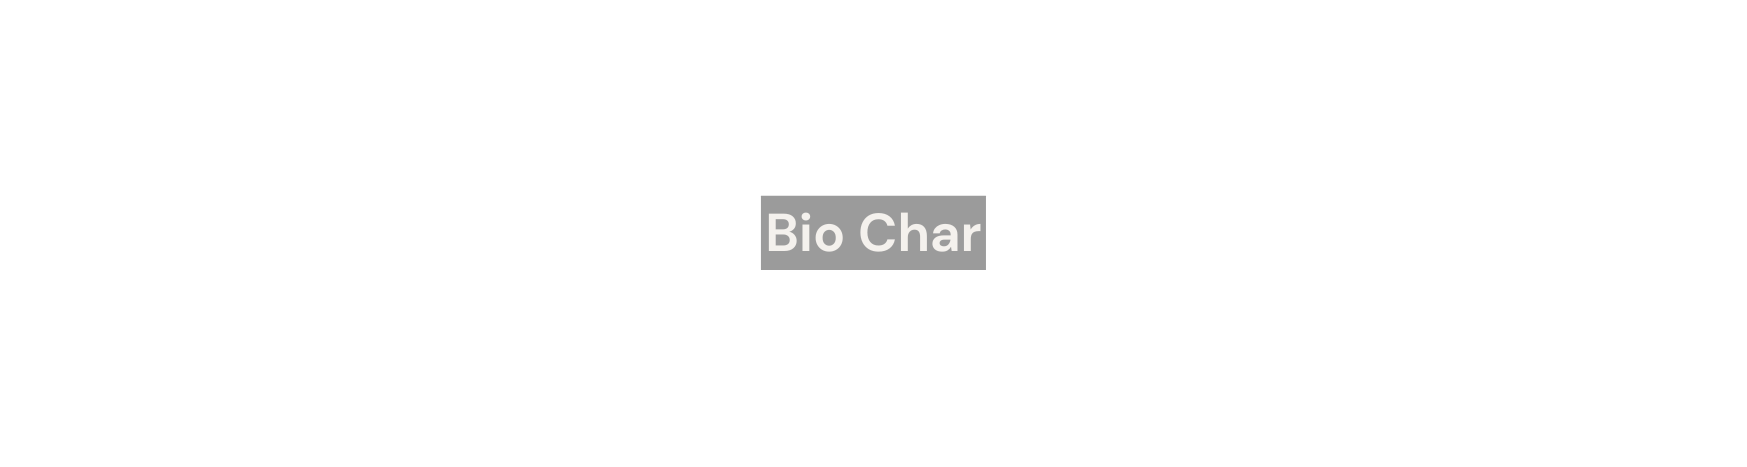 Bio Char